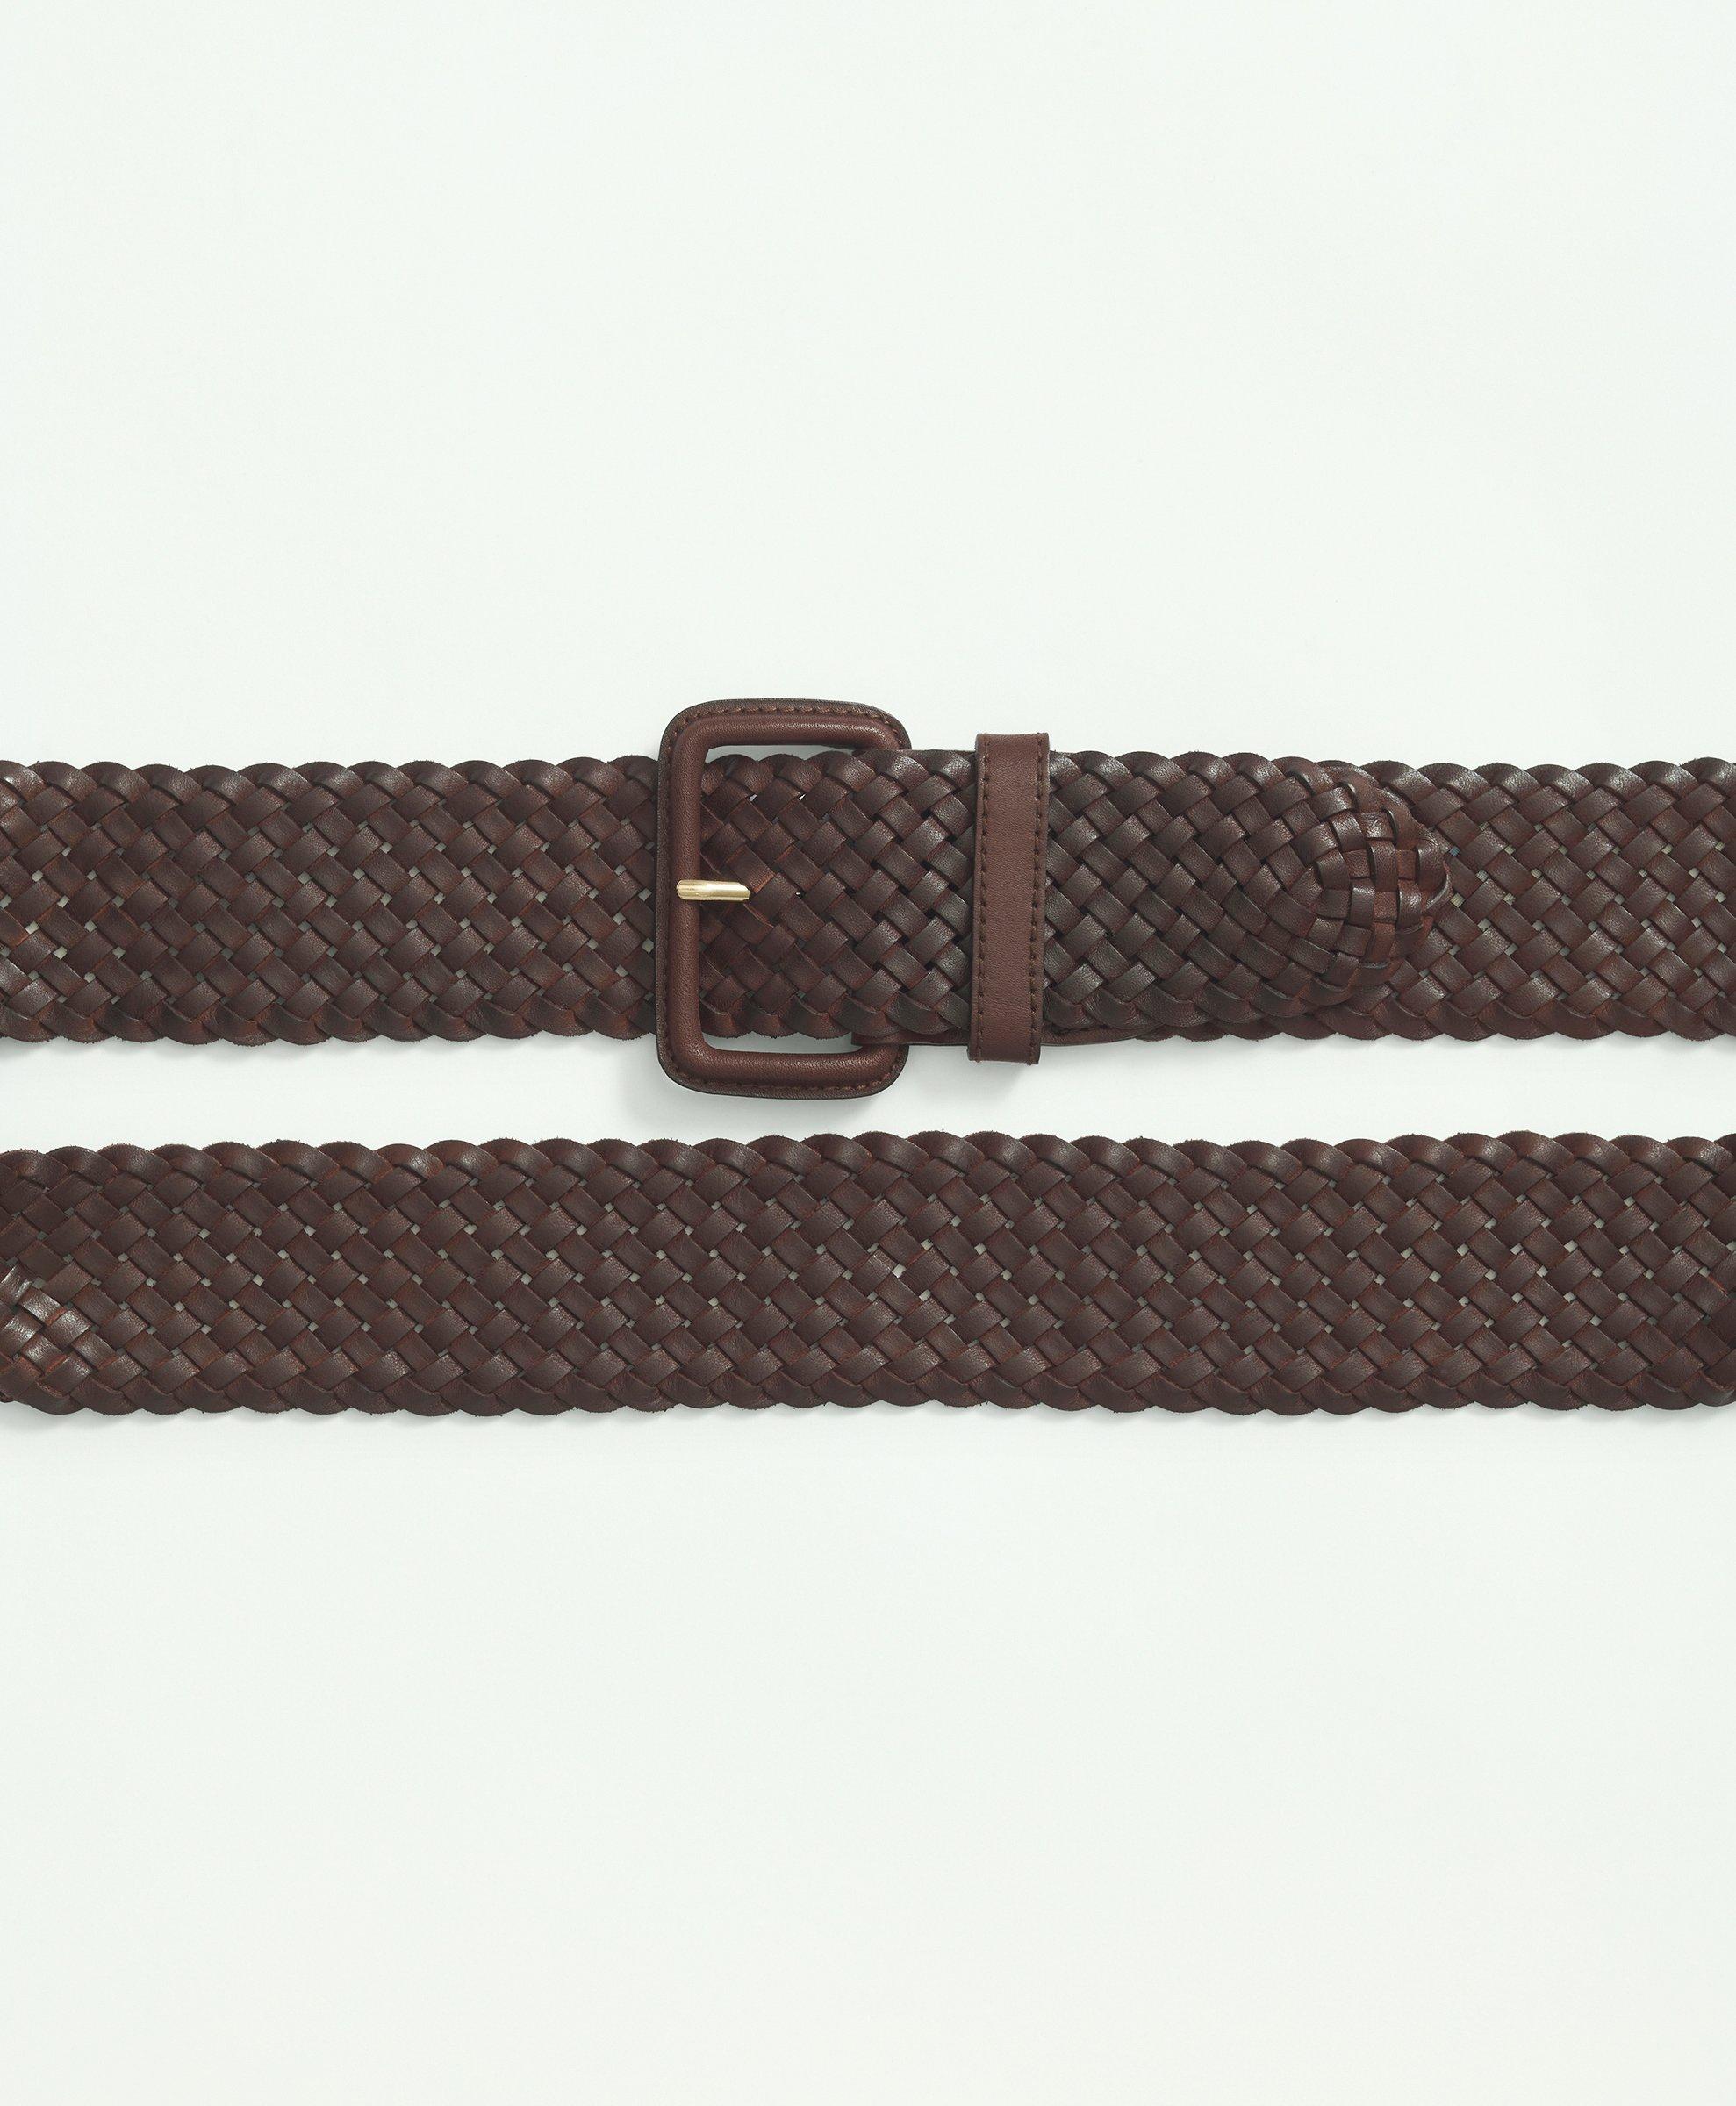 Brooks Brothers Men's Braided Leather Belt, Dark Brown